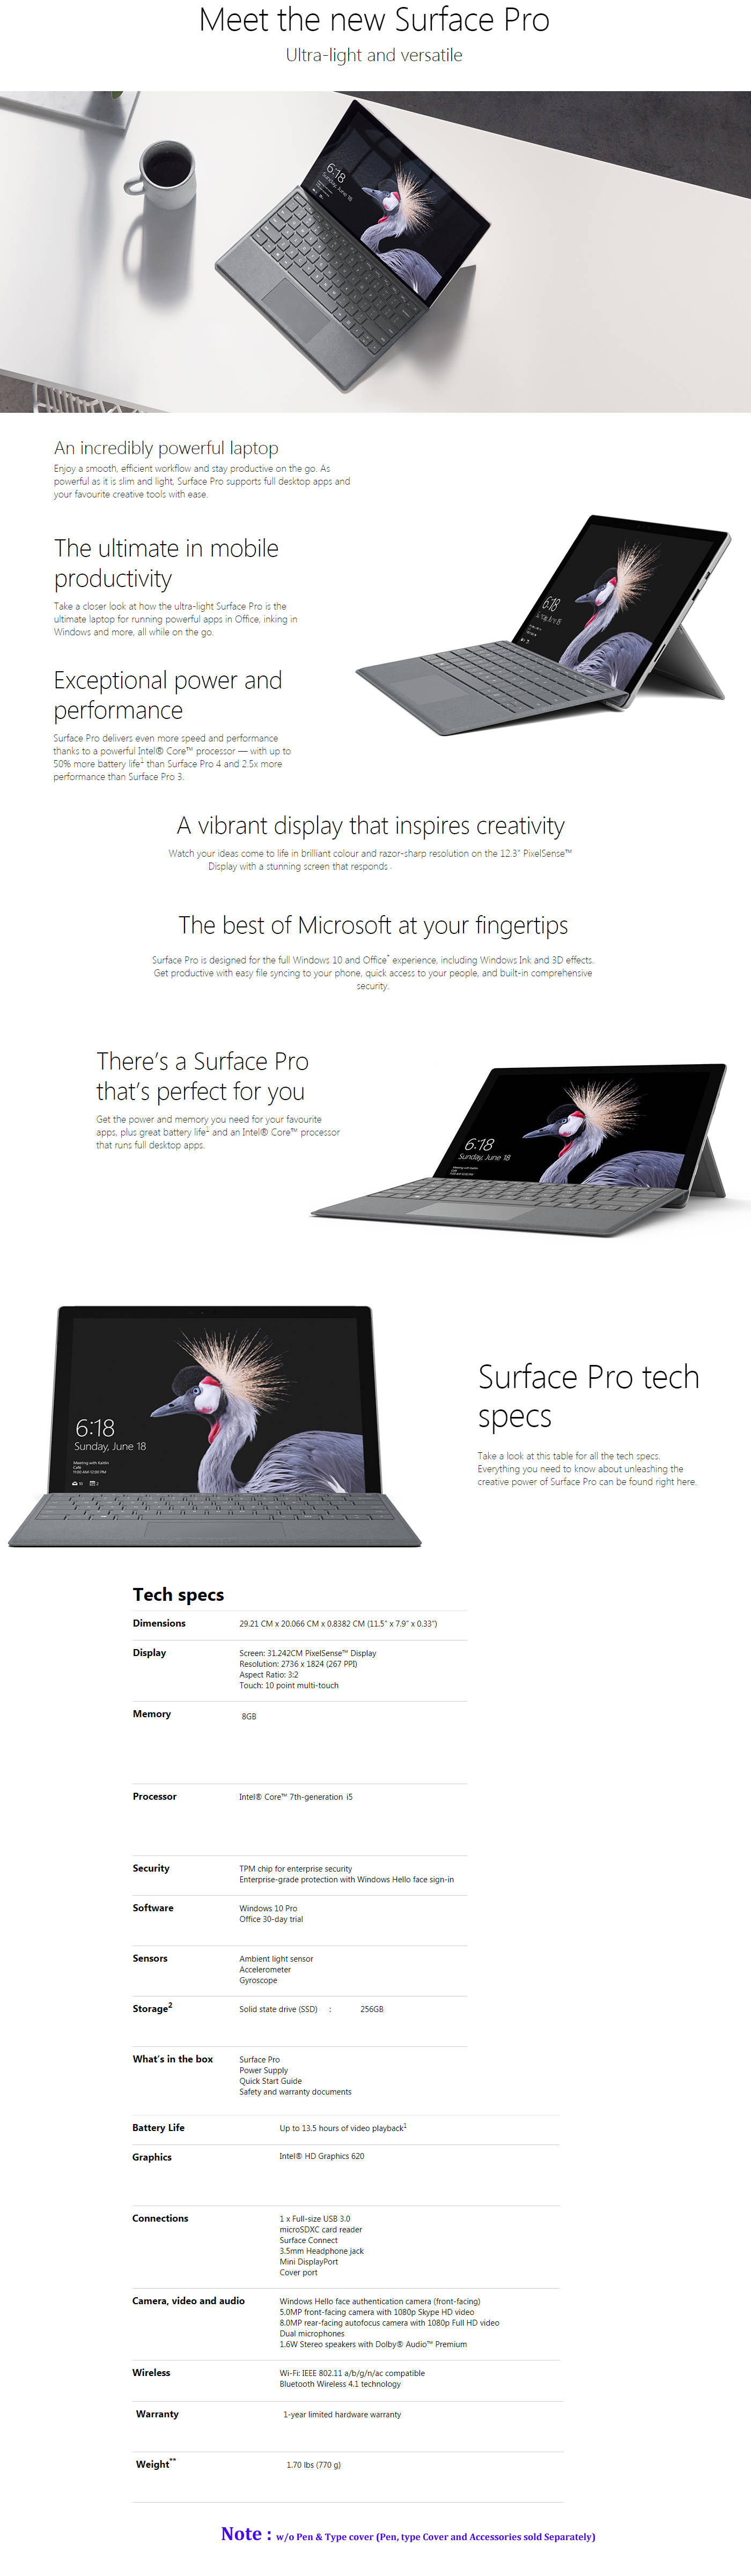  Buy Online Microsoft Surface Pro - FJY-00015 (Intel 7th Gen-Core i5, 8GB, 256GB SSD, 12.3inch Screen, Windows 10 Pro)